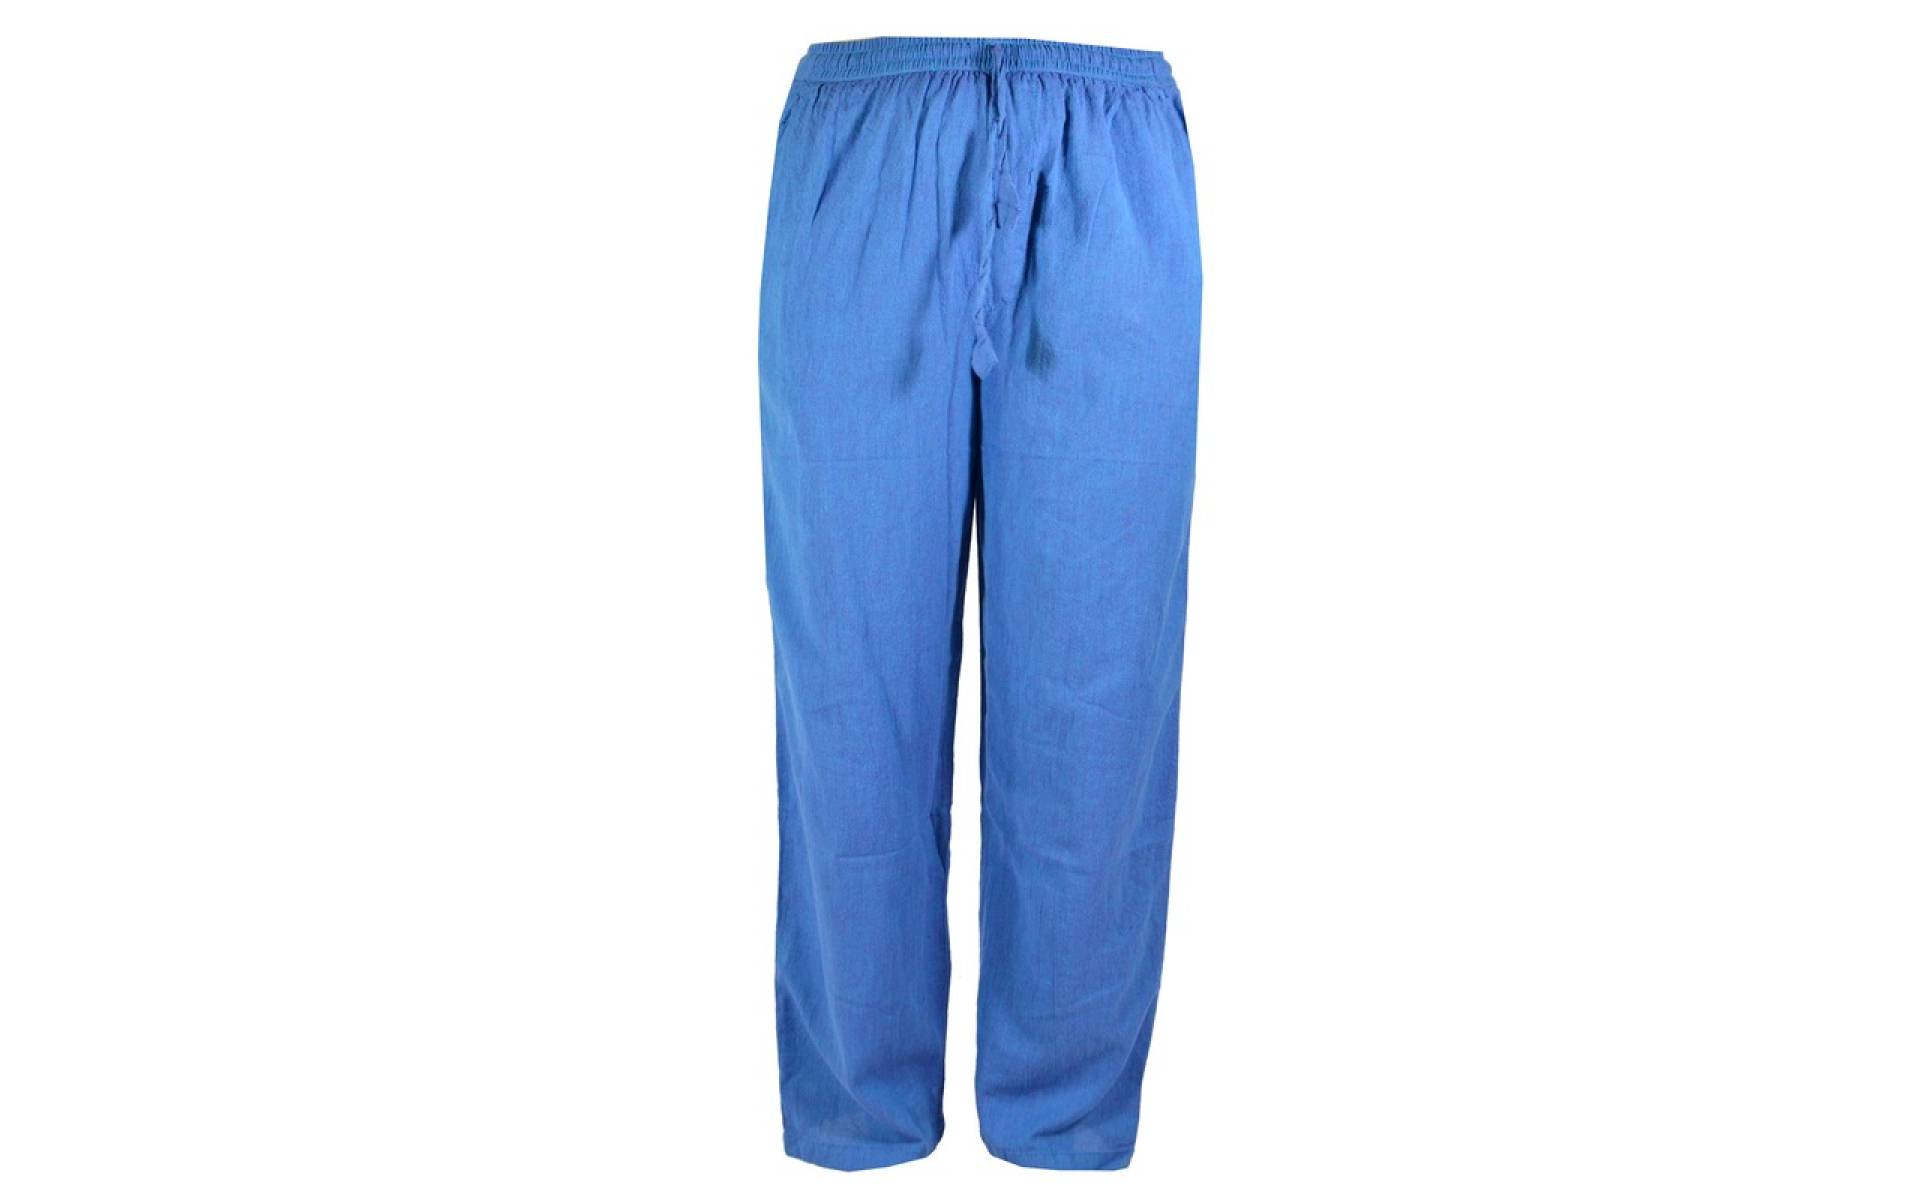 Unisex dlhé modré nohavice s vreckami, pružný pás